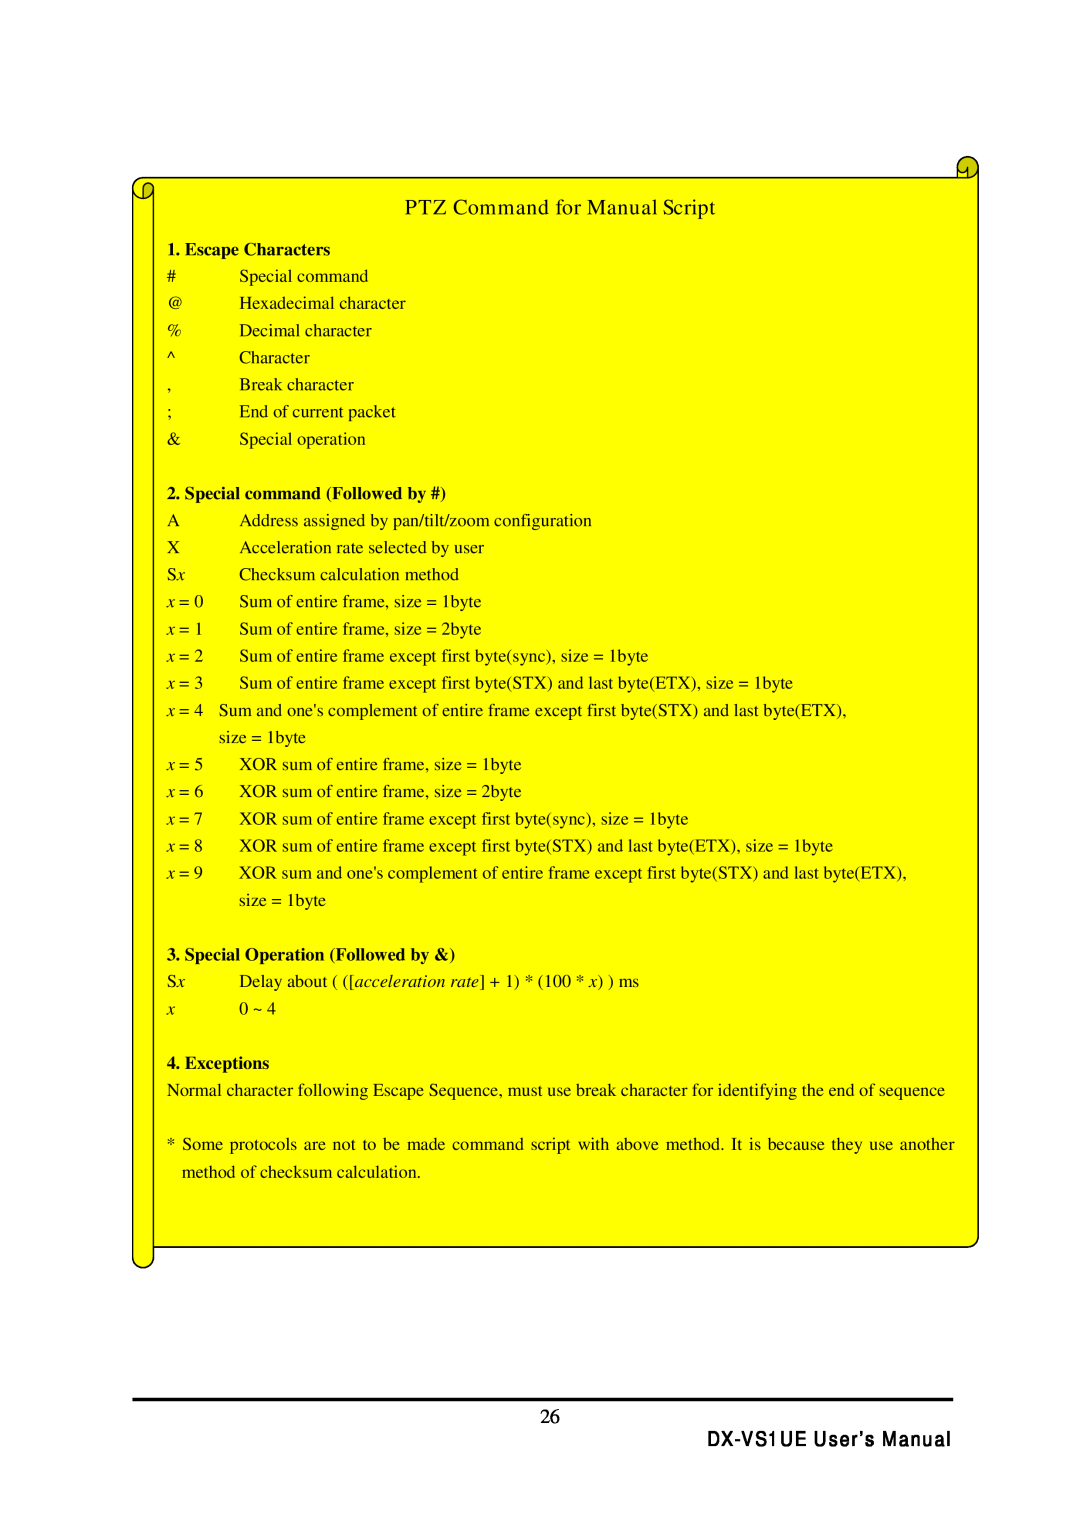 Mitsubishi Electronics user manual PTZ Command for Manual Script, DX-VS1UE User’s Manual, Escape Characters, Exceptions 